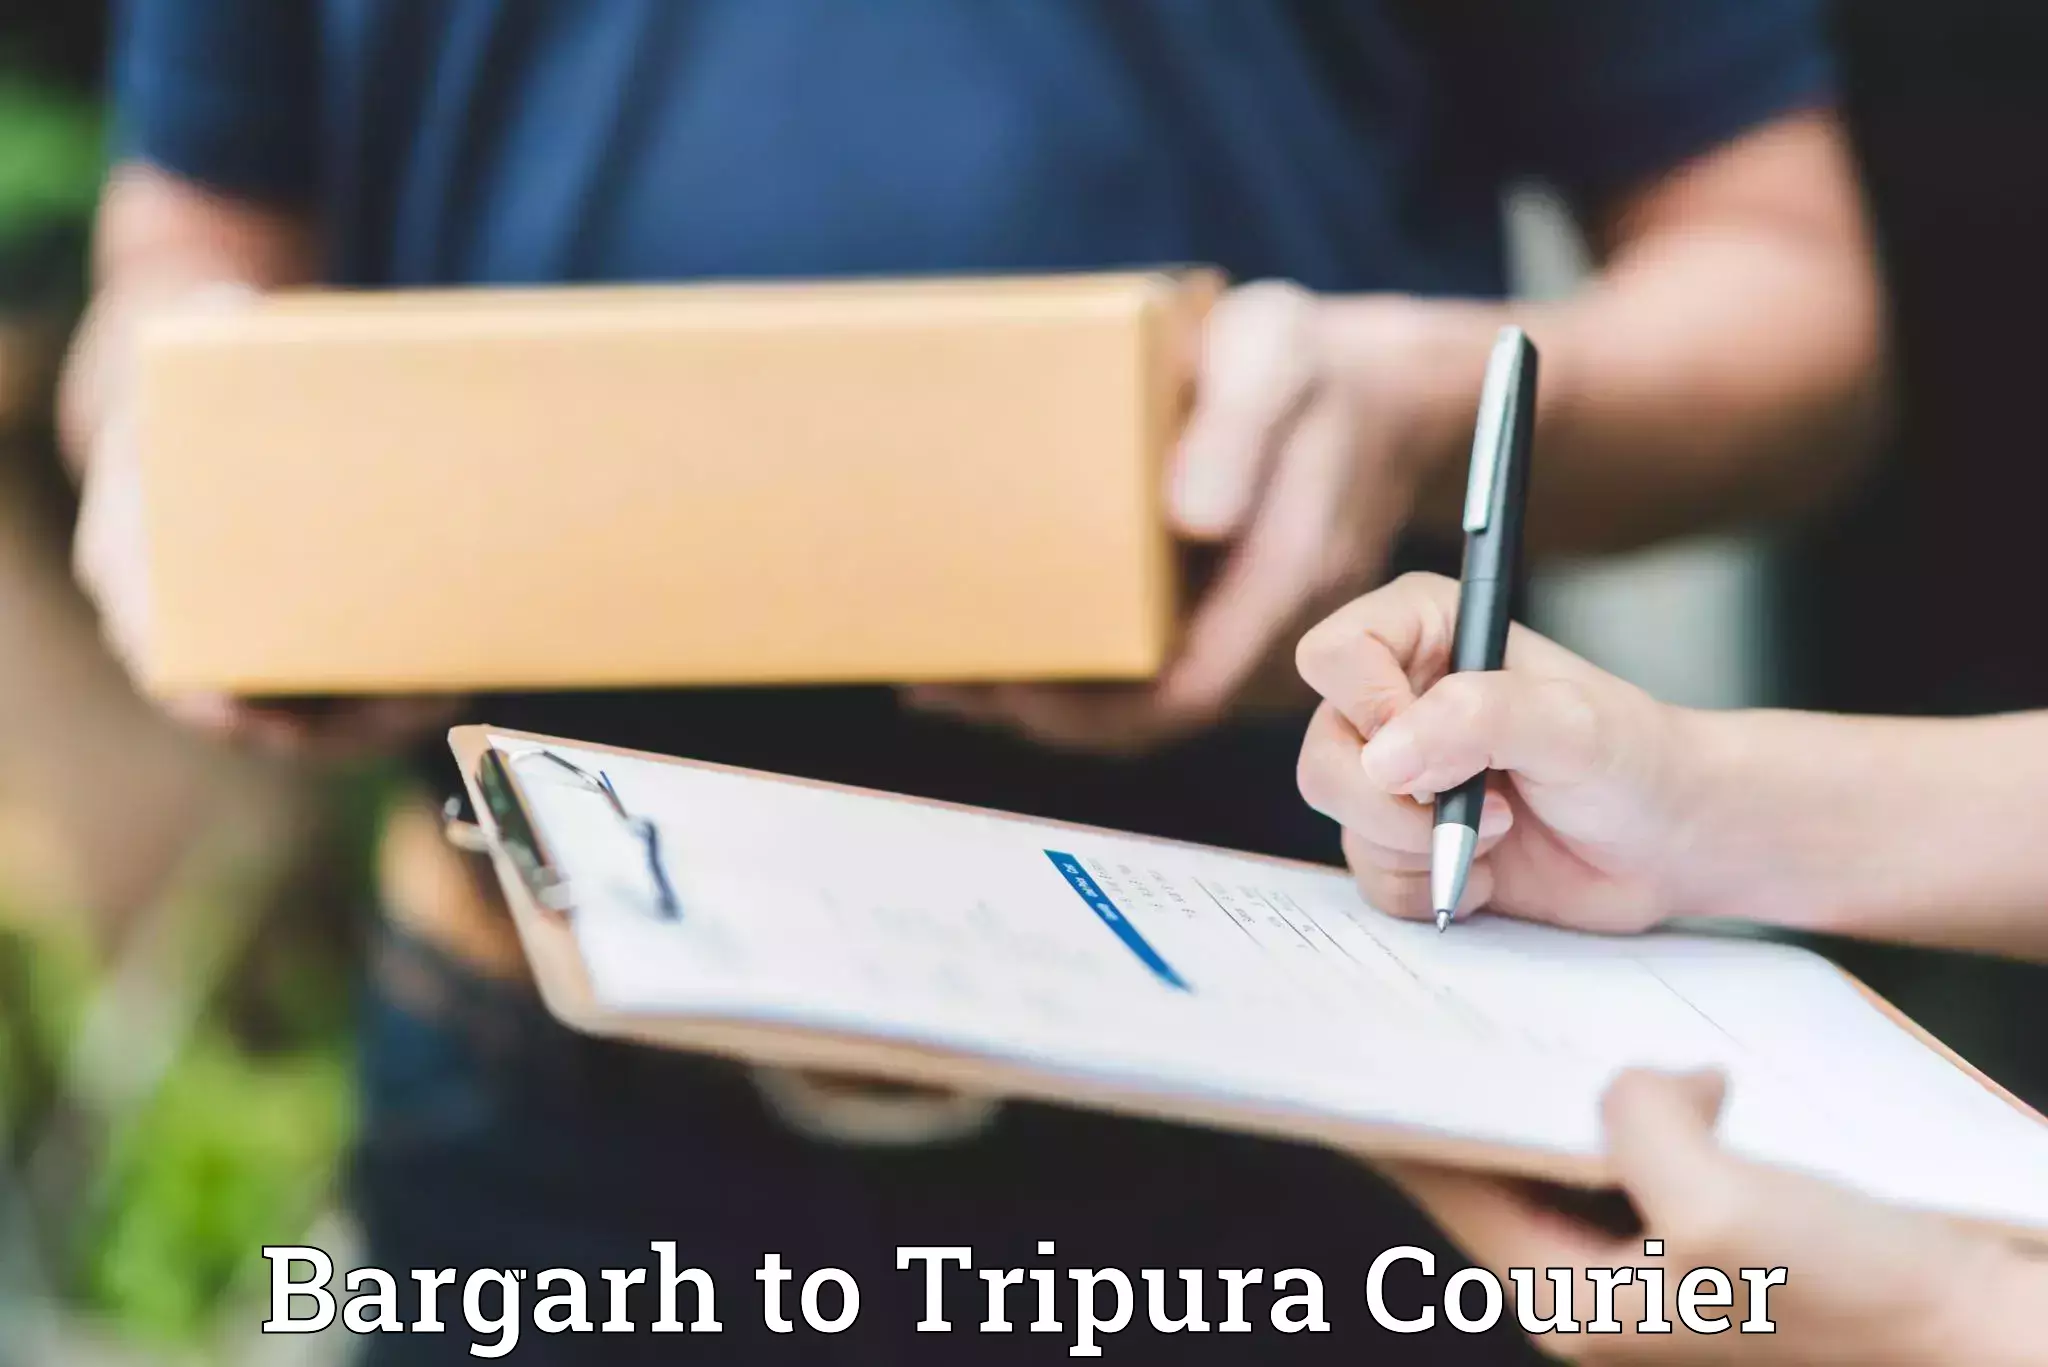 Furniture moving experts Bargarh to Udaipur Tripura